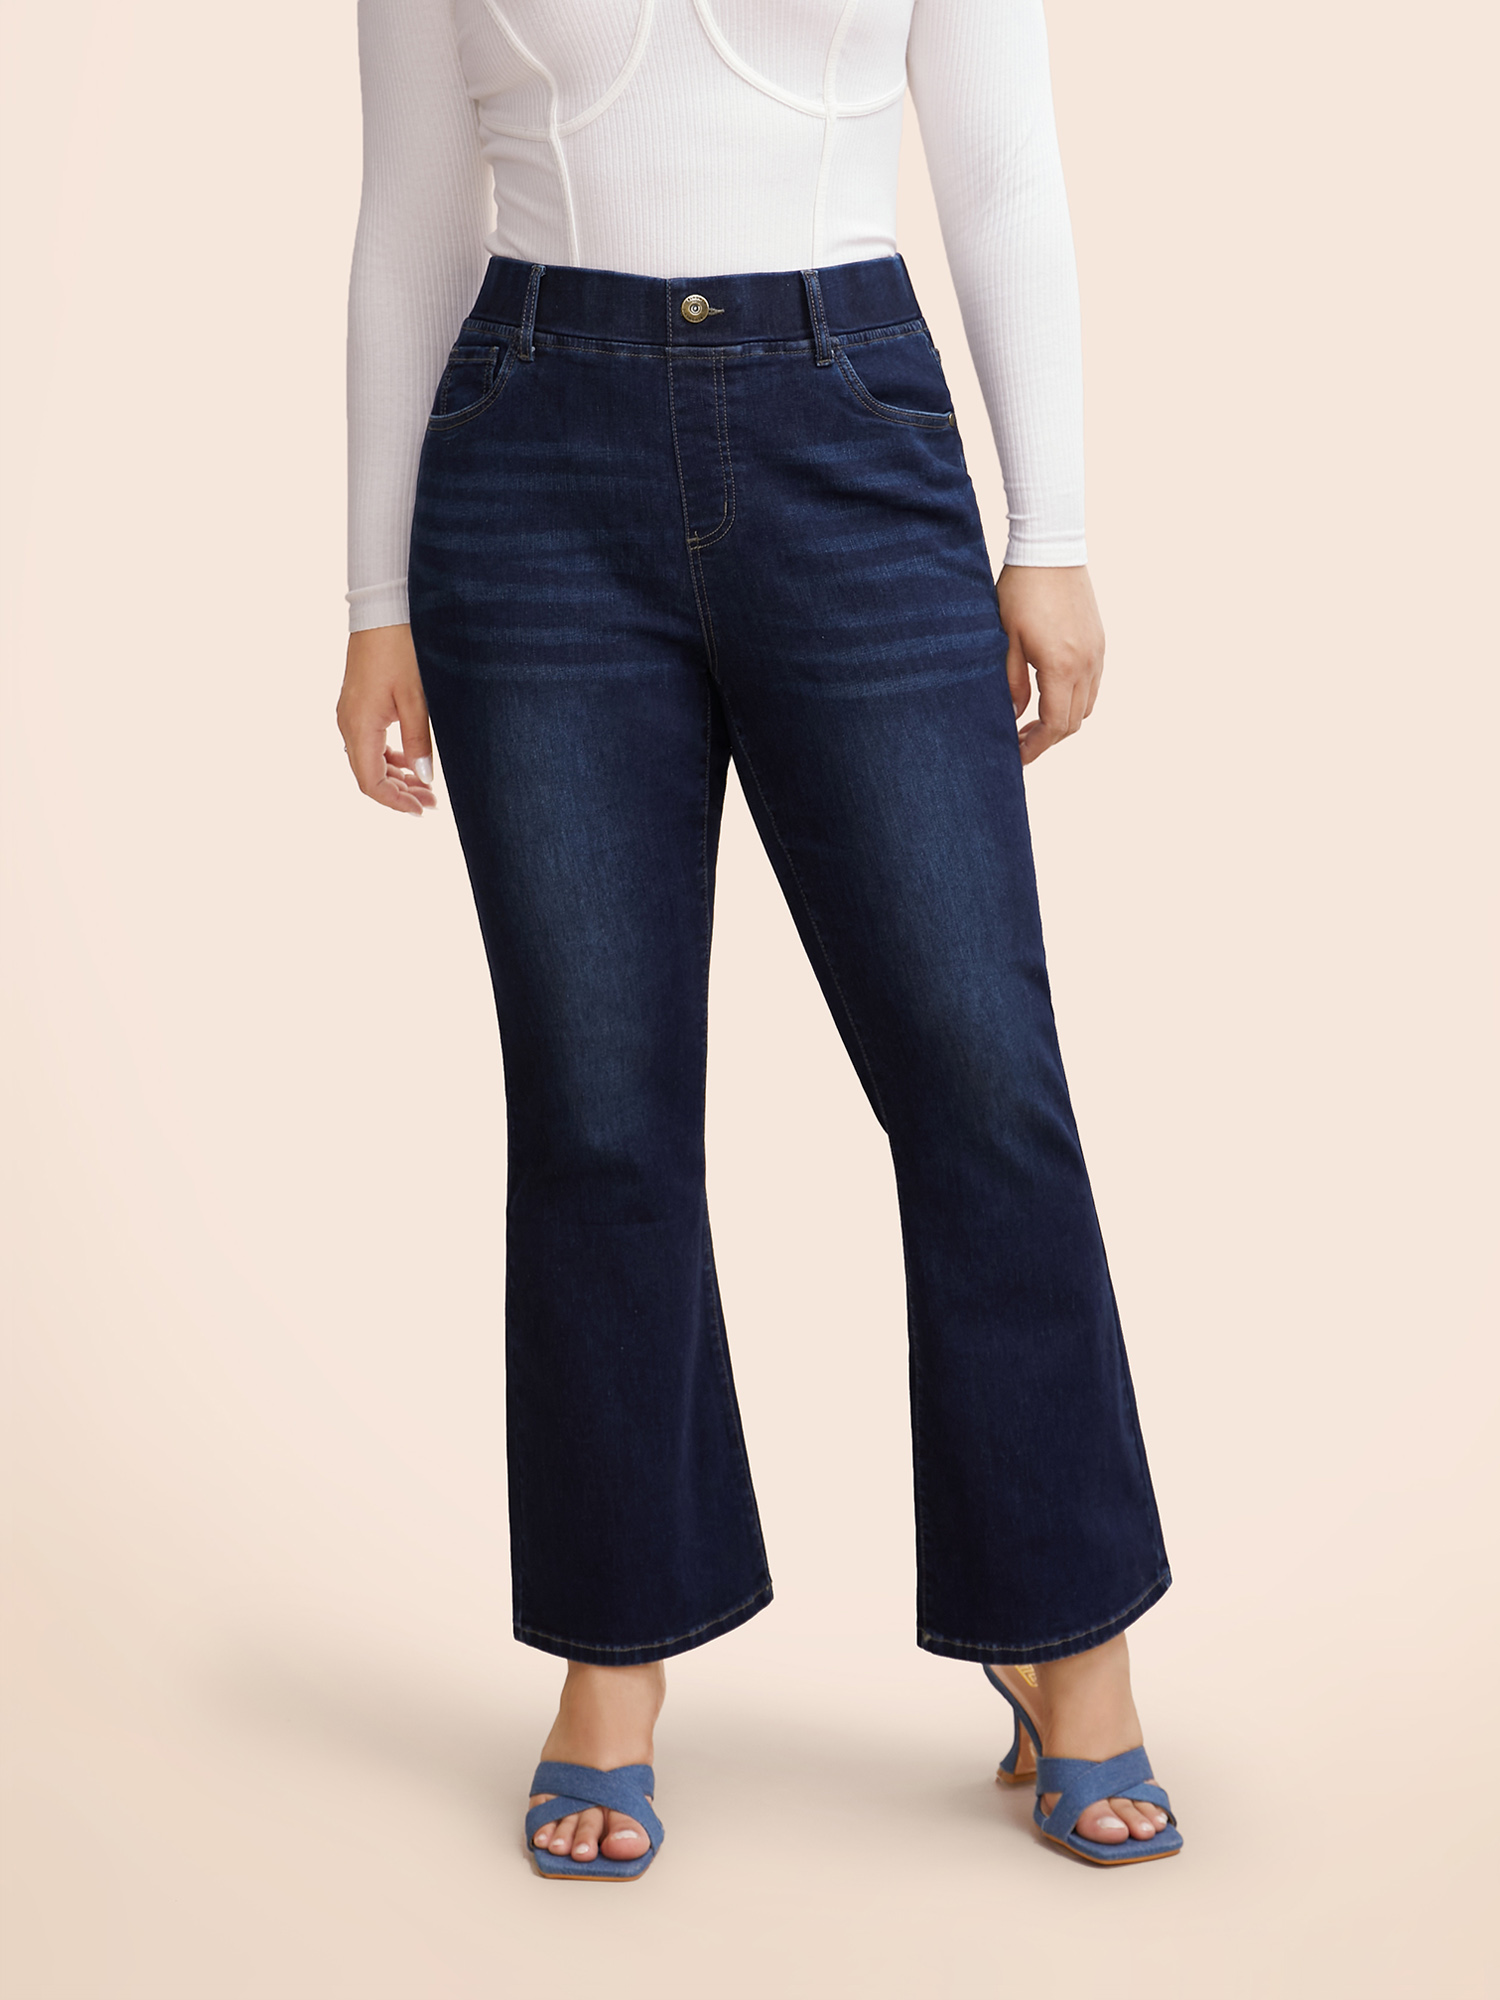 

Plus Size High Stretch Dark Wash Bootcut Jeans Women Denimindigo Casual Roll Hem High stretch Slanted pocket Jeans BloomChic